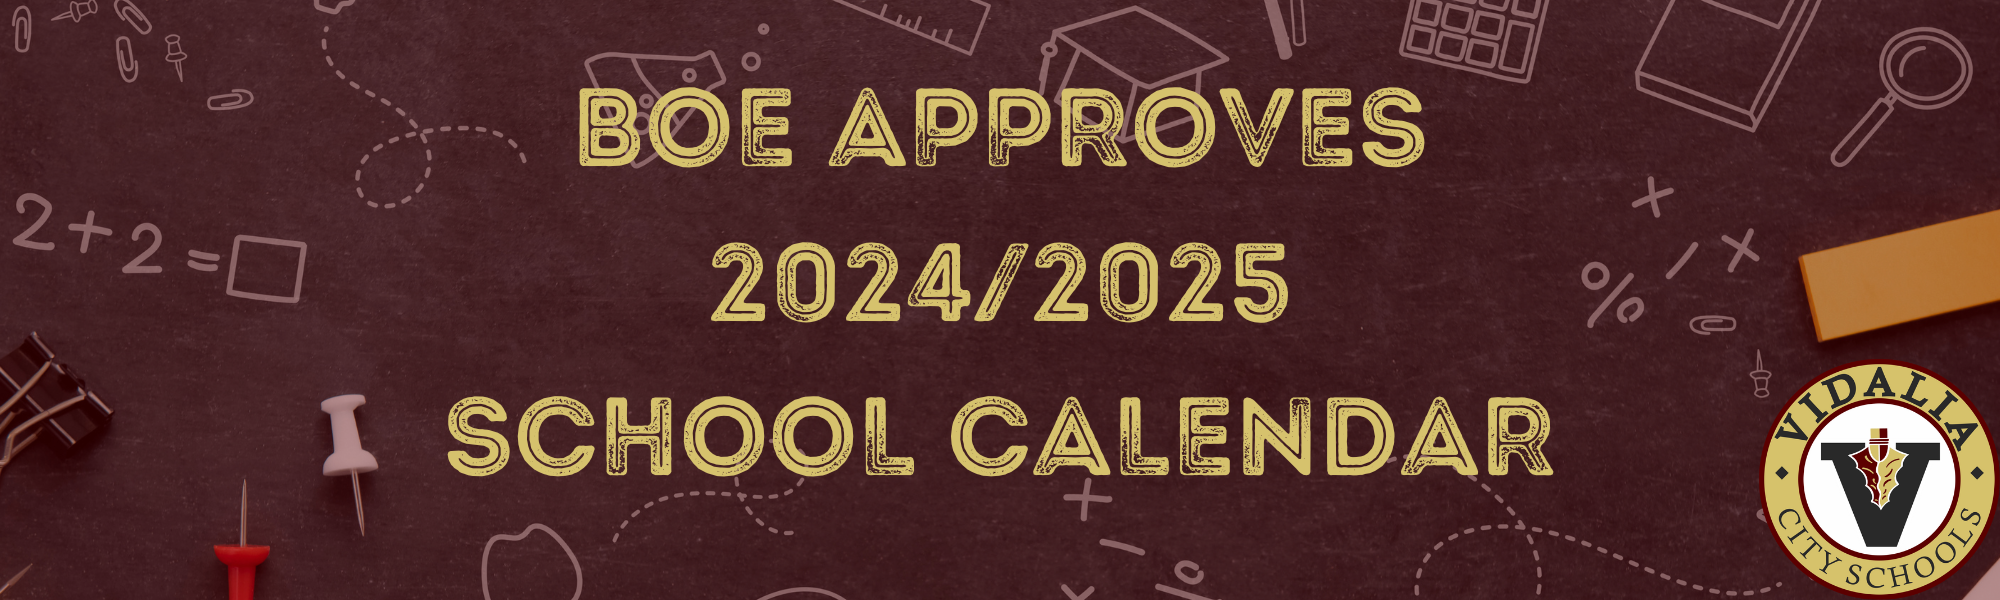 2024/25 School Calendar Announced